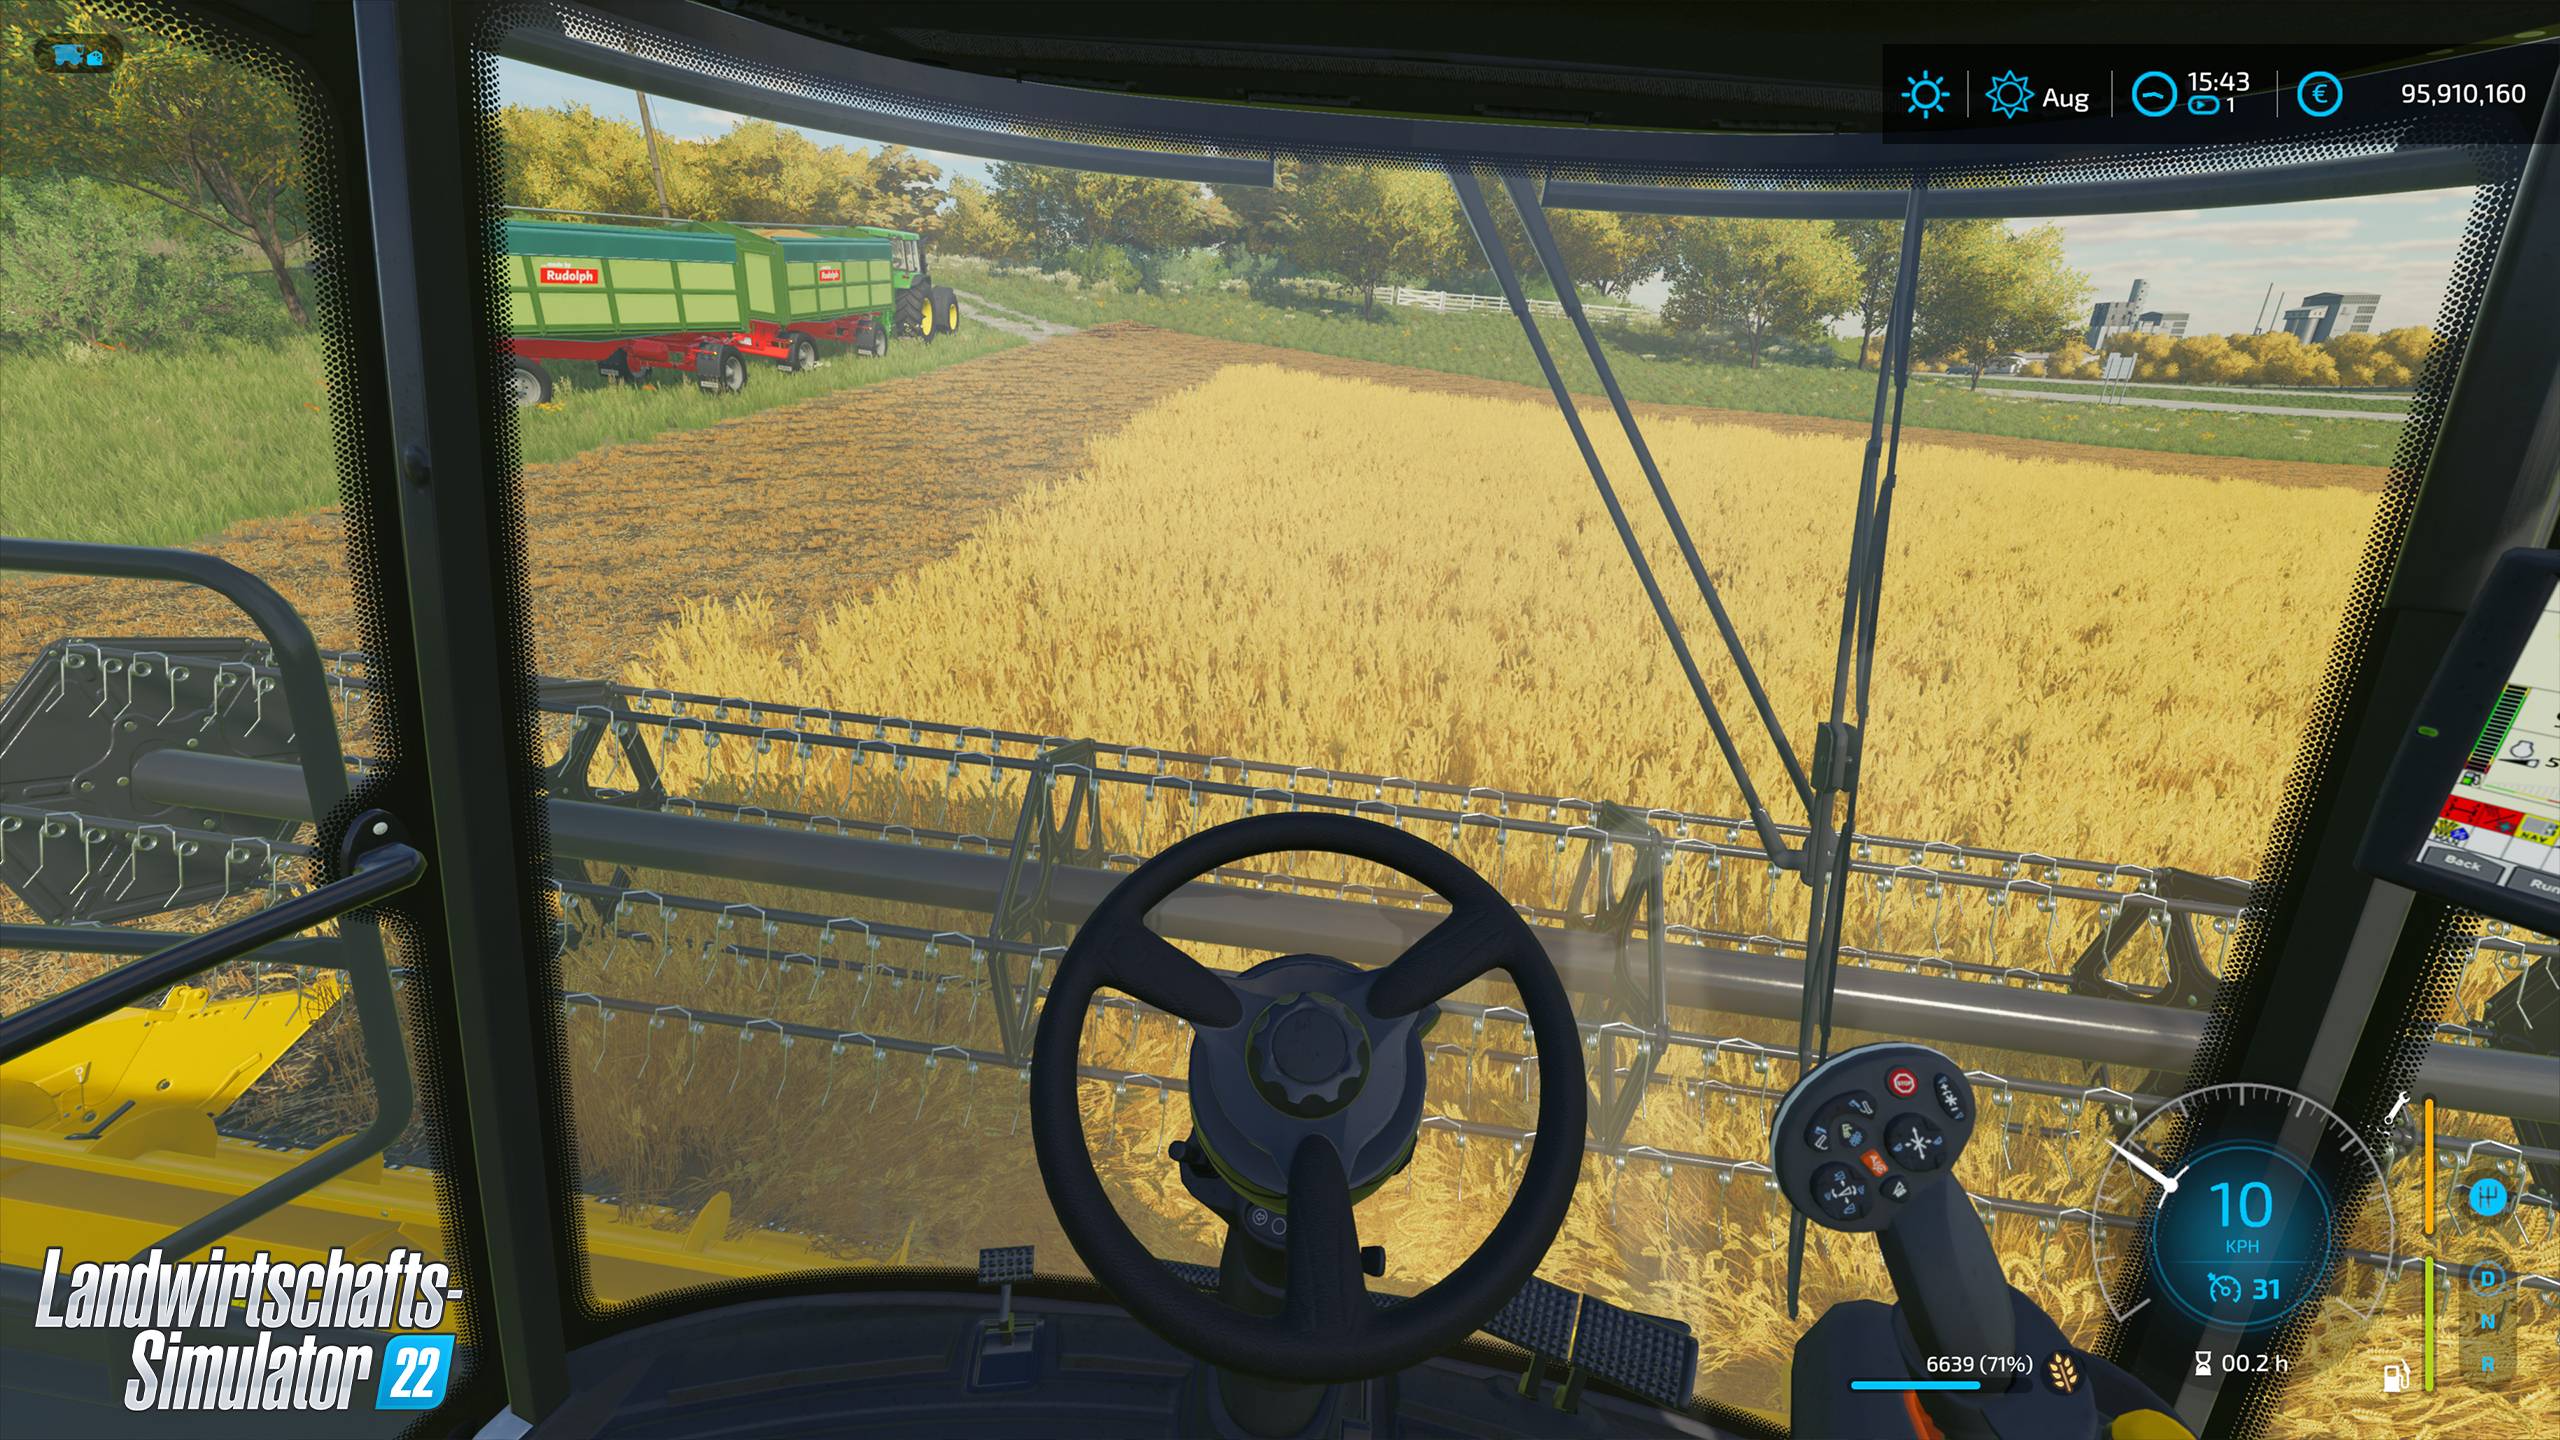 Landwirtschafts-Simulator 22 - PS4 ++ Cyberport